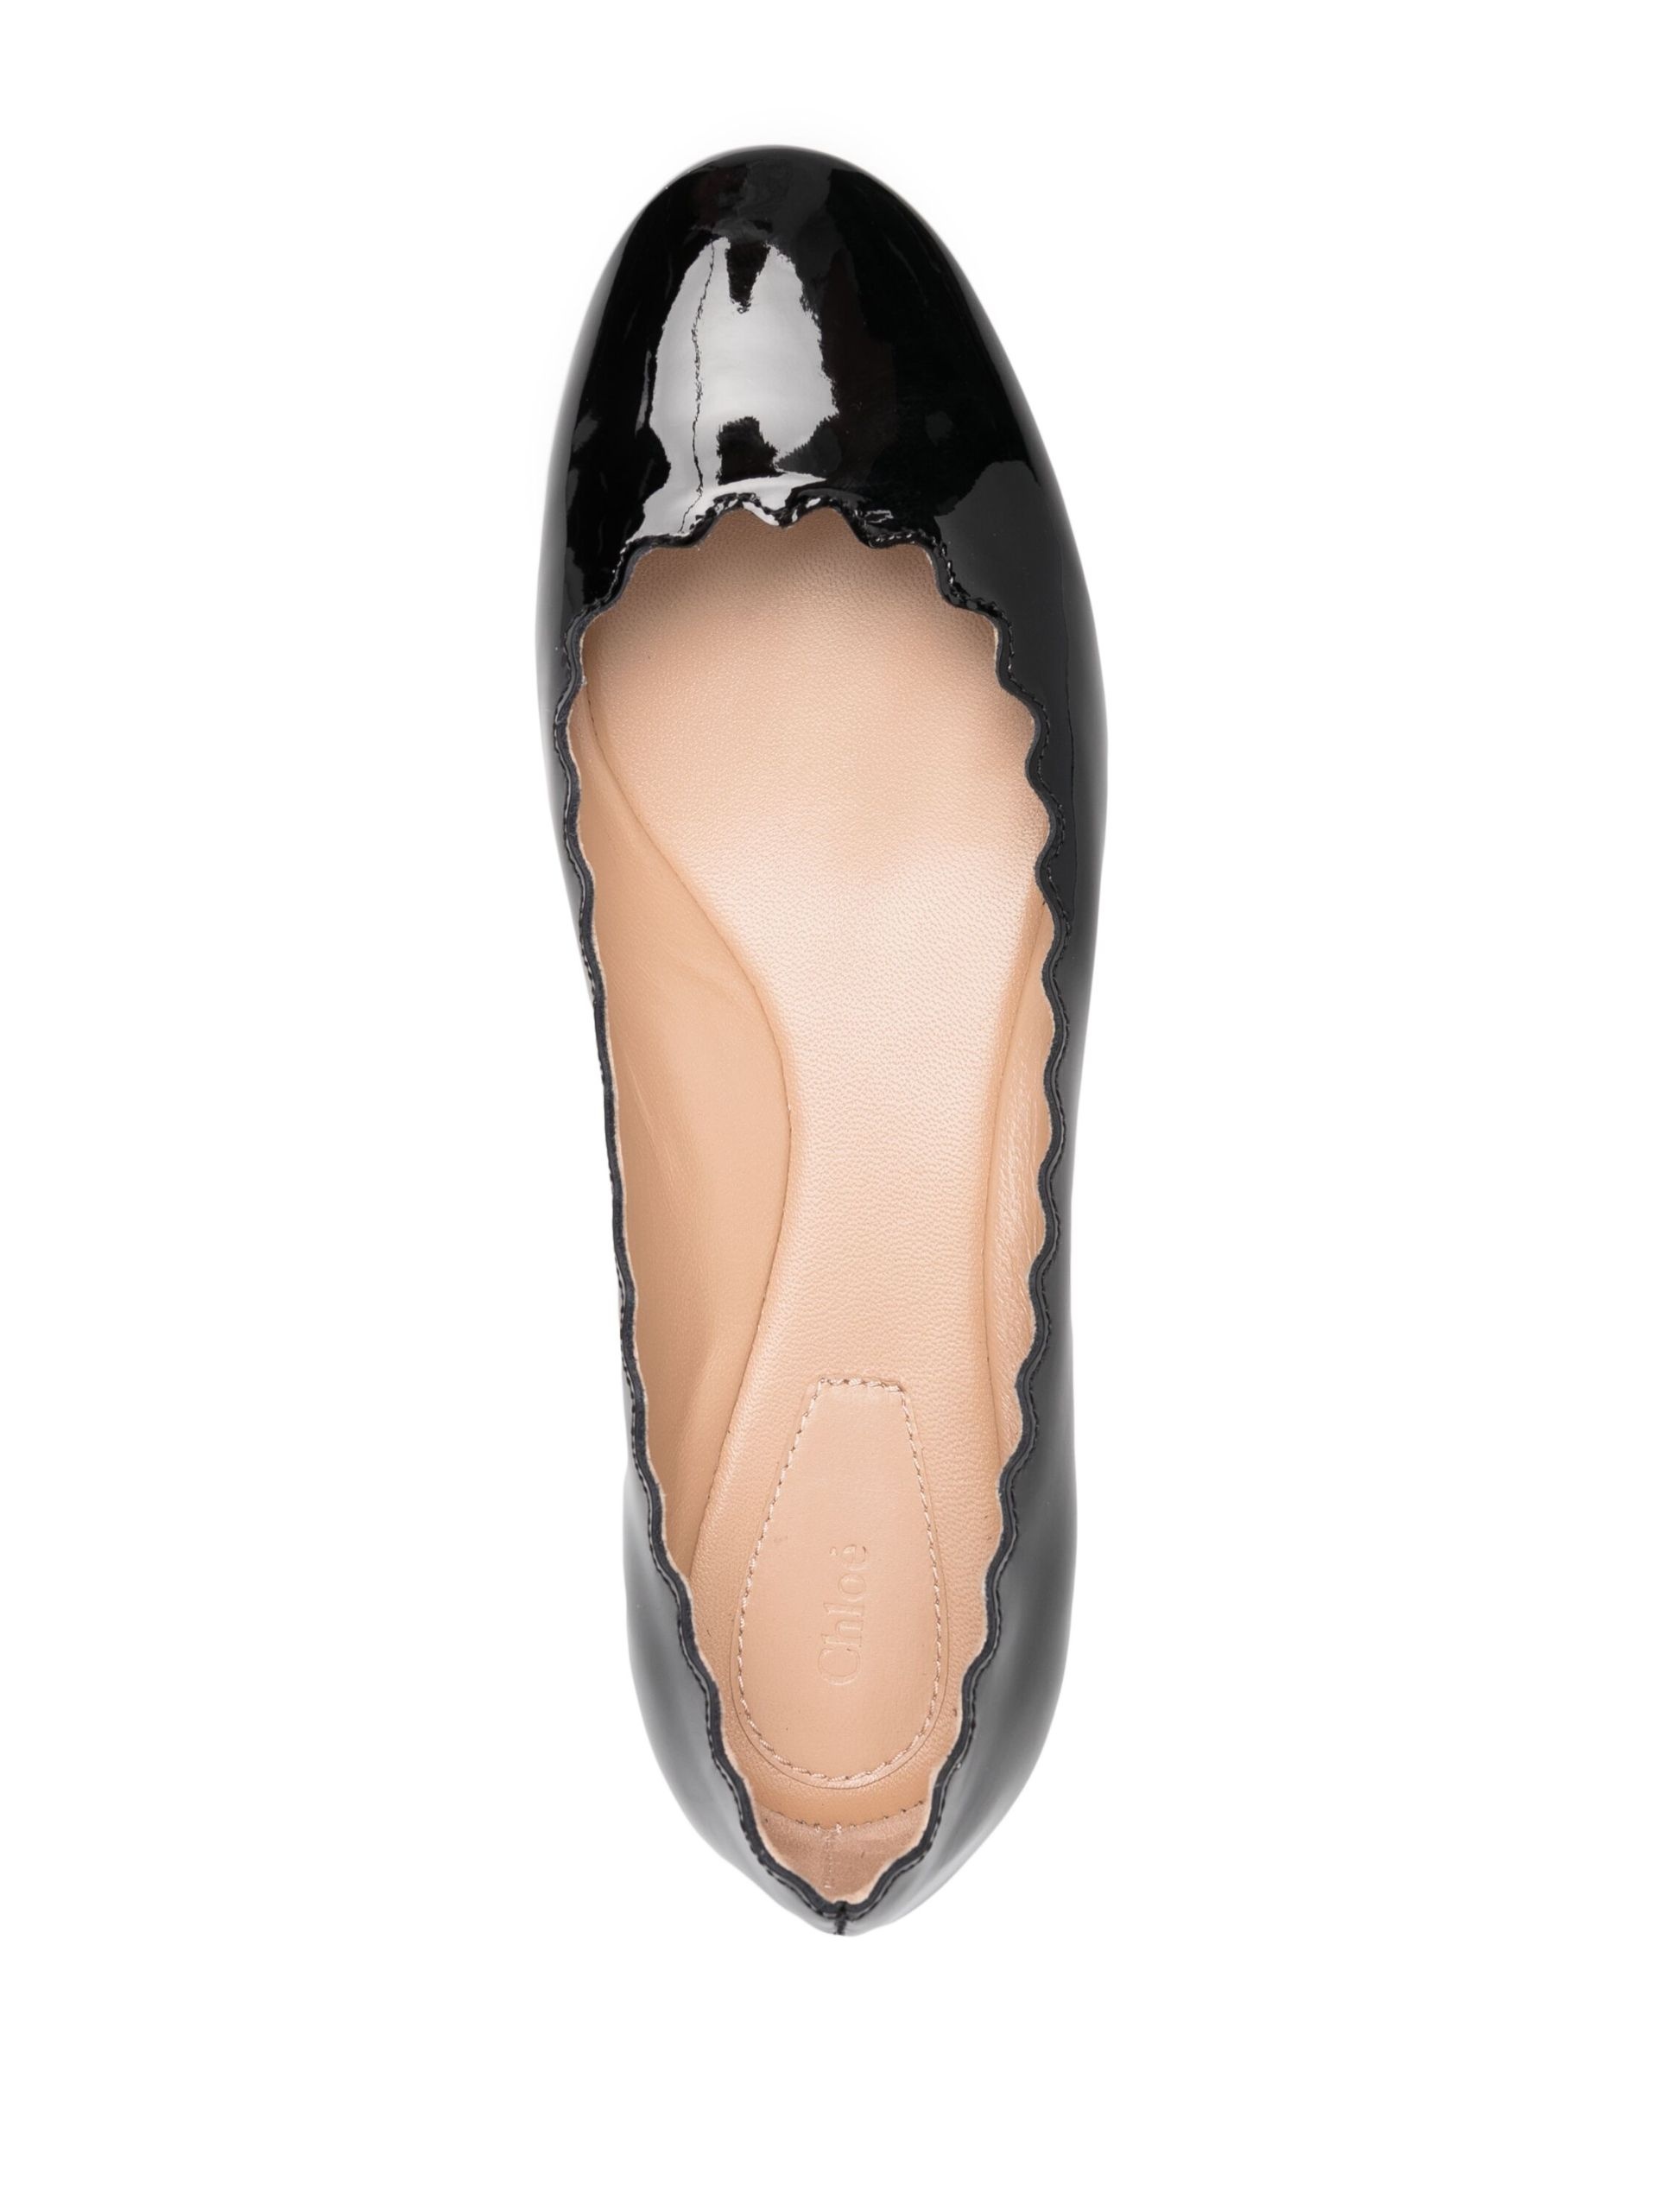 Black Patent Leather Ballet Flats - 4